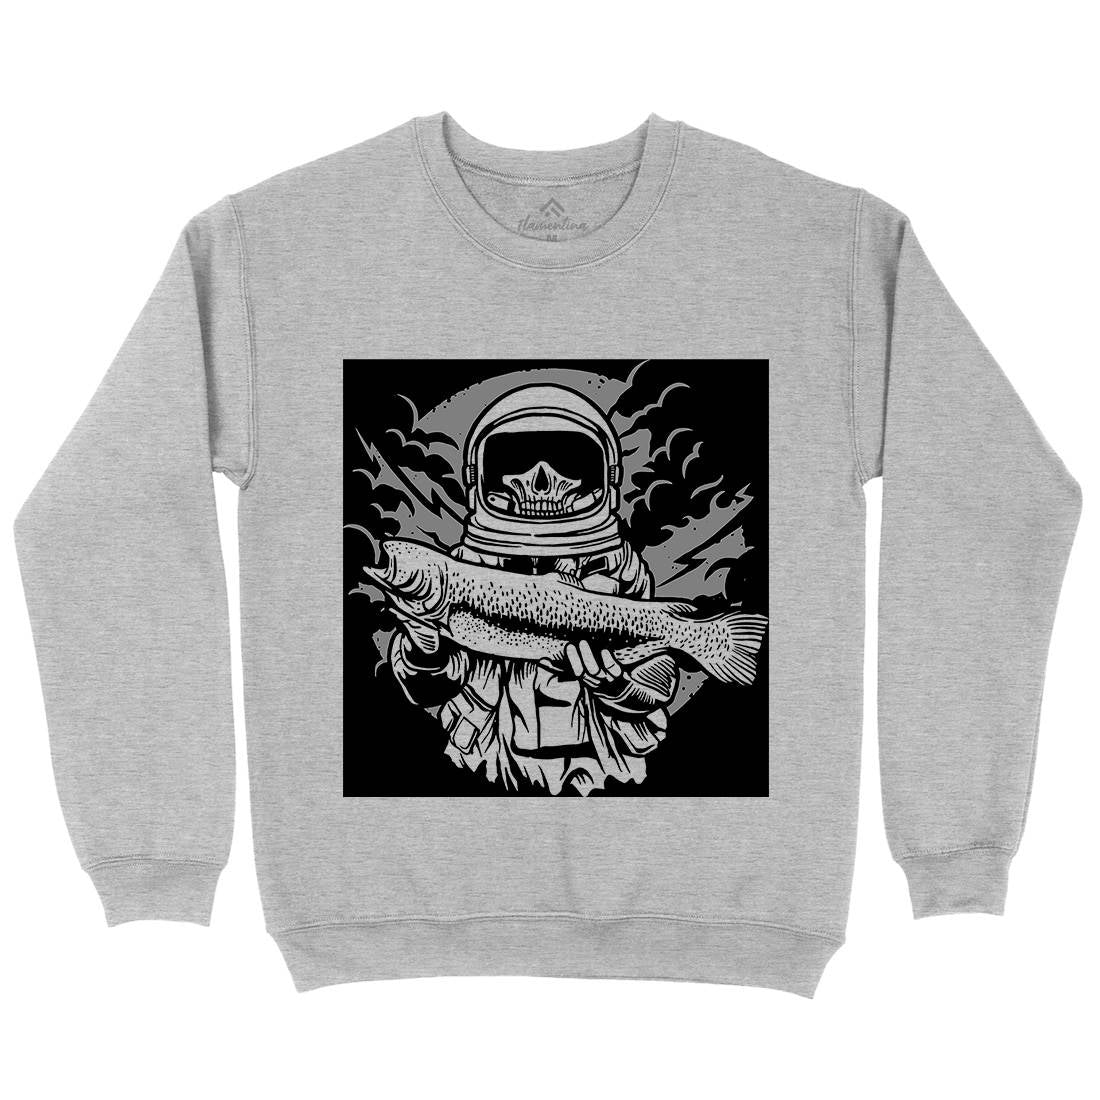 Astronaut Fishing Kids Crew Neck Sweatshirt Space A504